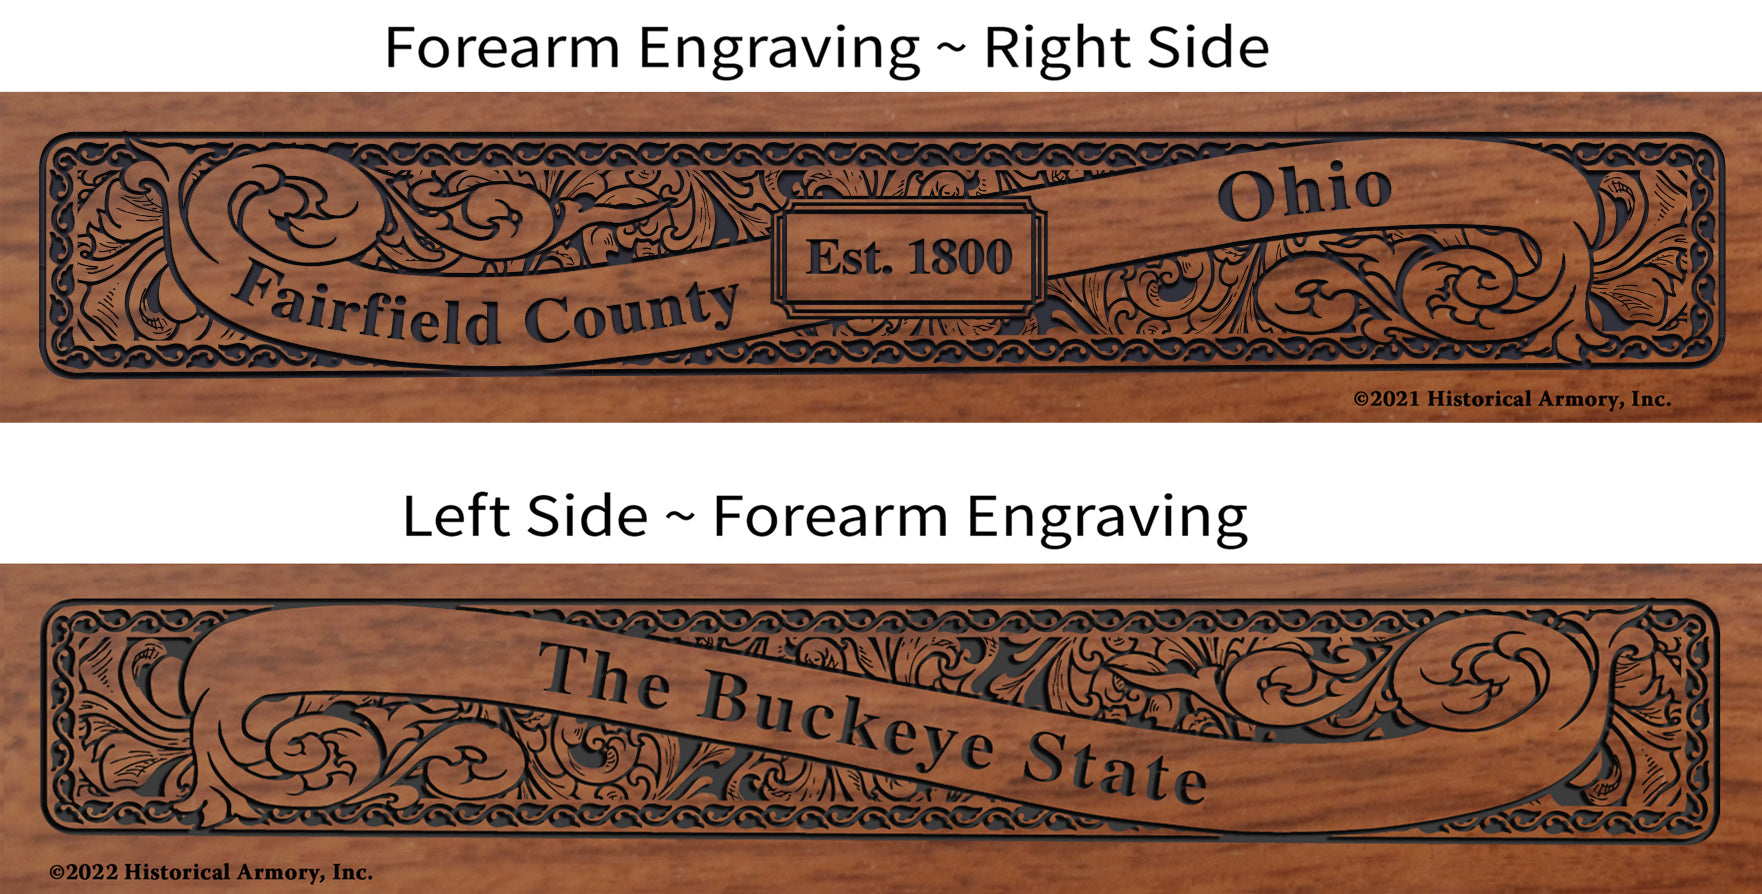 Fairfield County Ohio Engraved Rifle Forearm